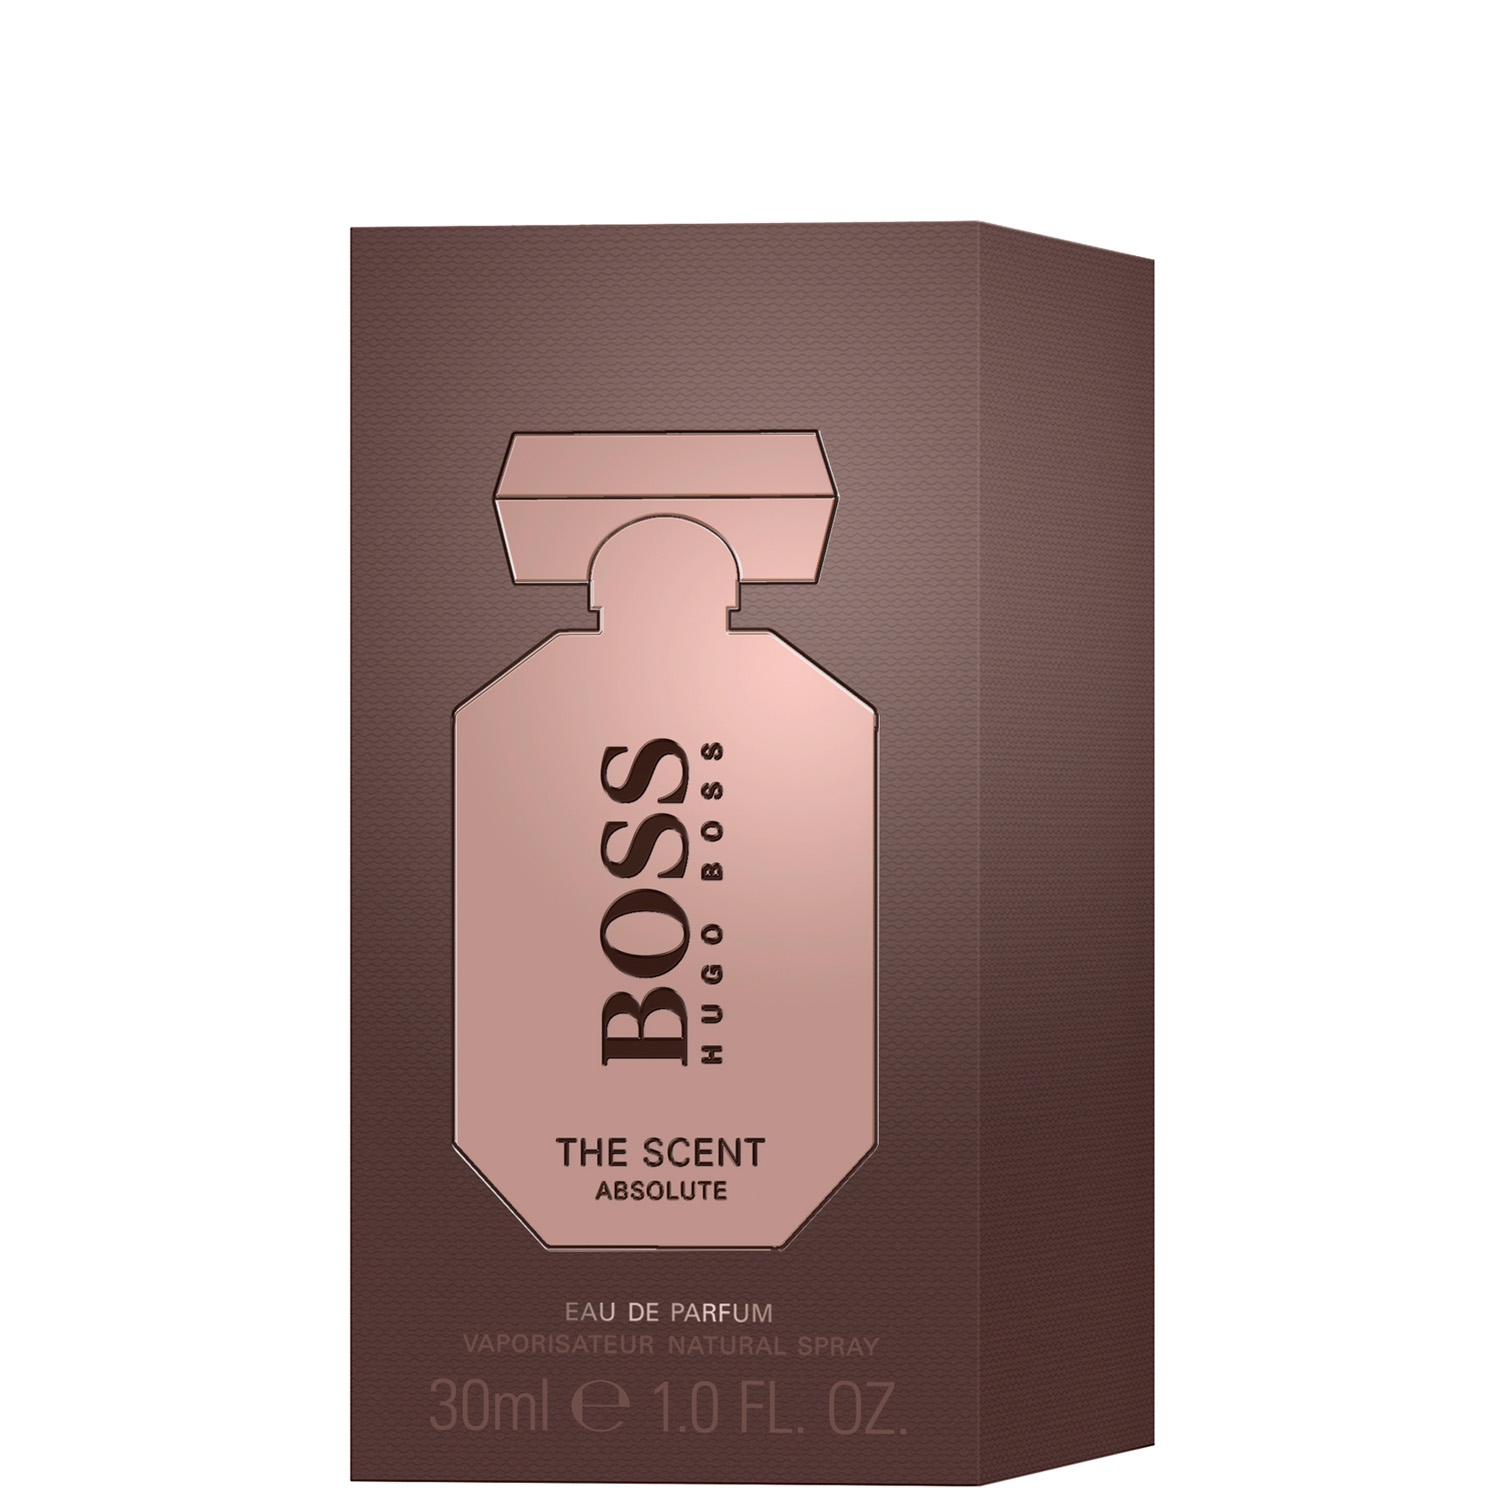 Hugo Boss The Scent Absolute for Her Eau de Parfum 30ml